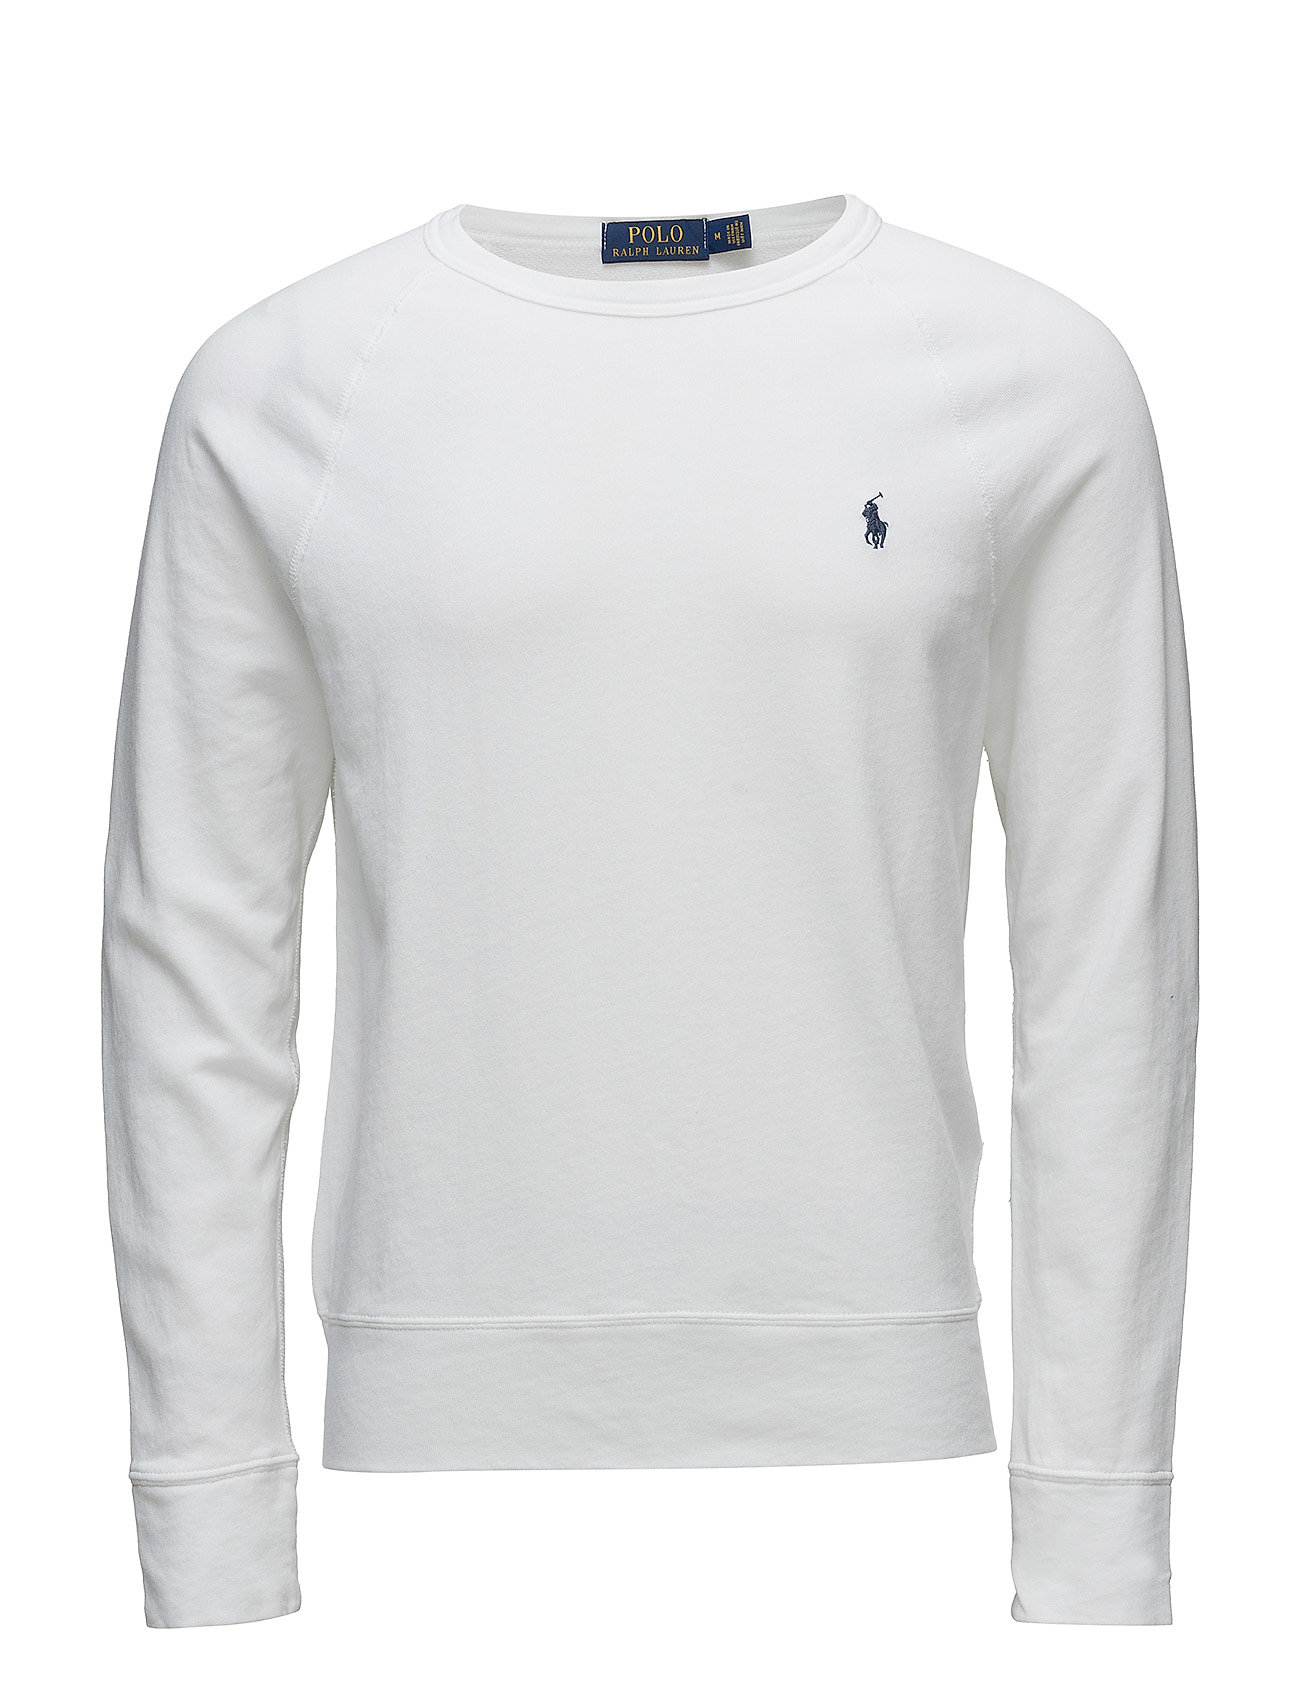 polo ralph lauren white sweatshirt